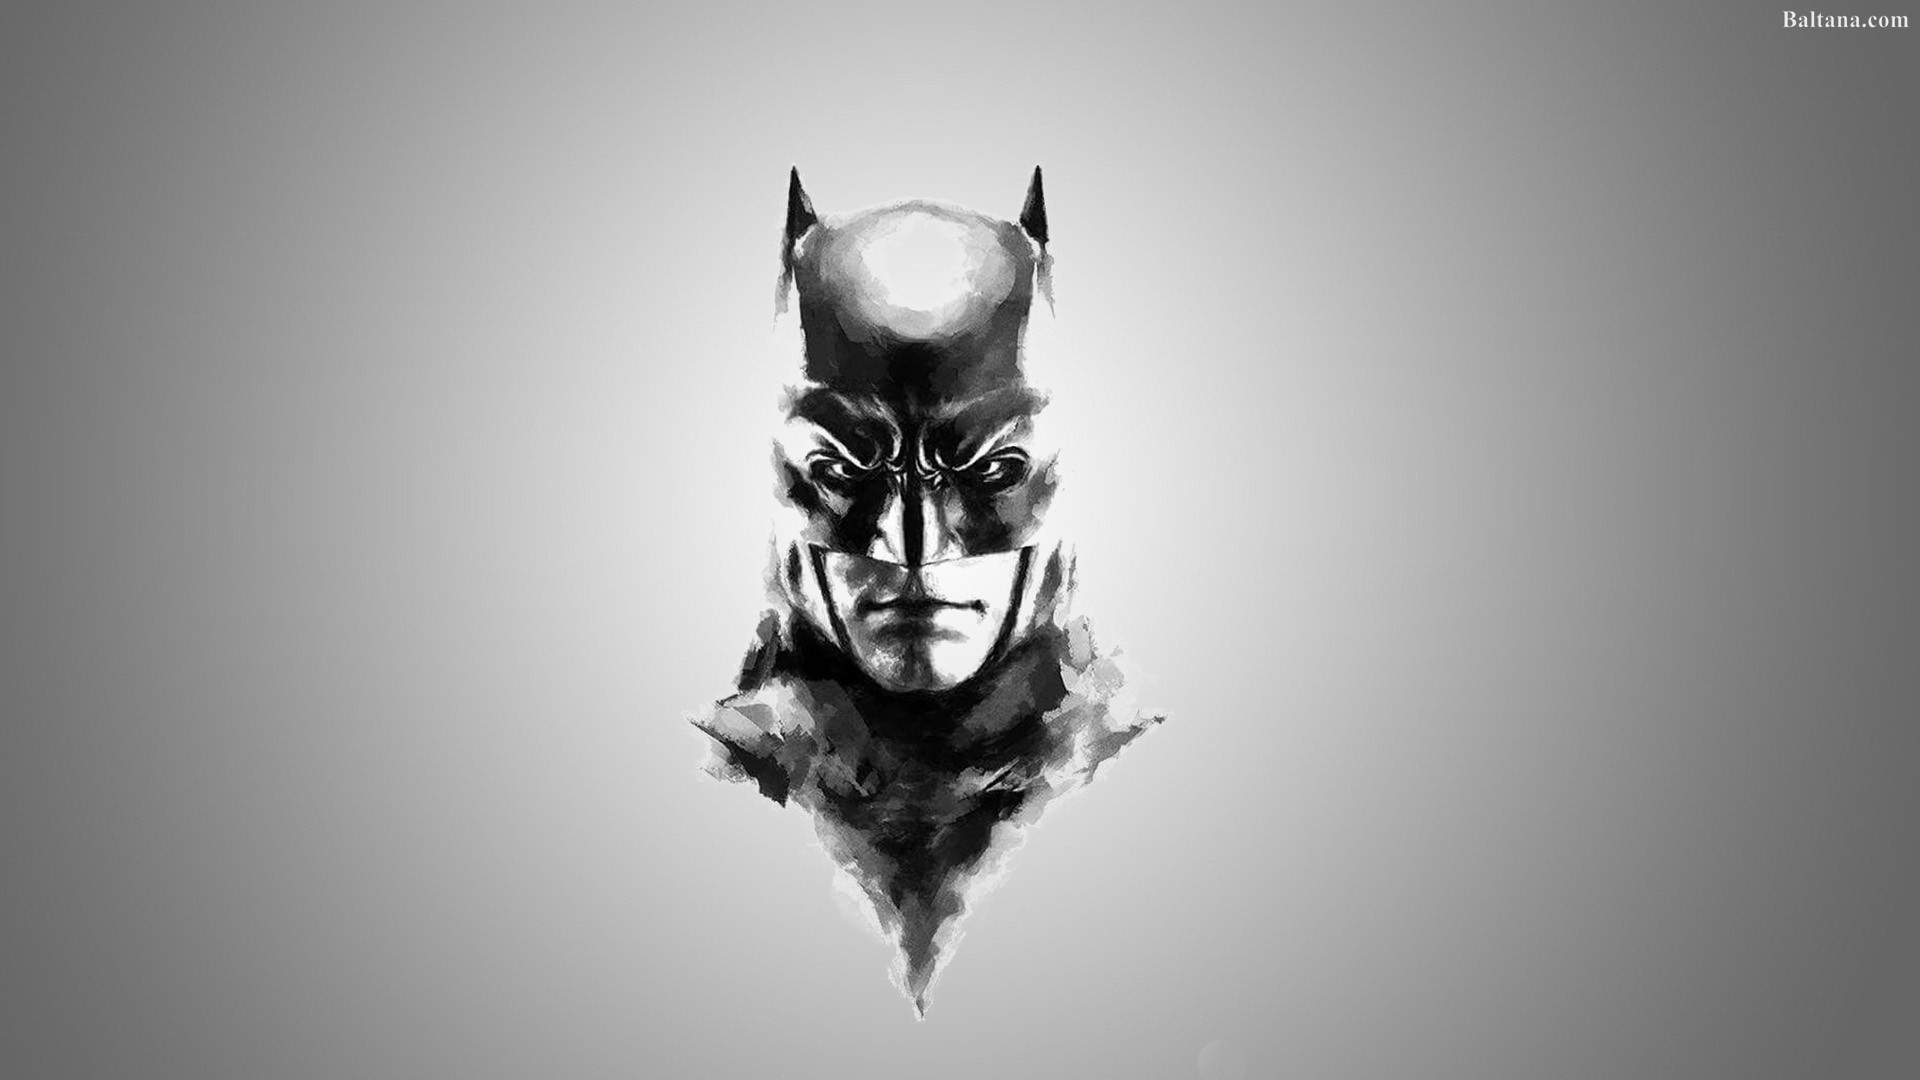 Batman Hd Background Wallpaper - Batman Hd Image Download , HD Wallpaper & Backgrounds